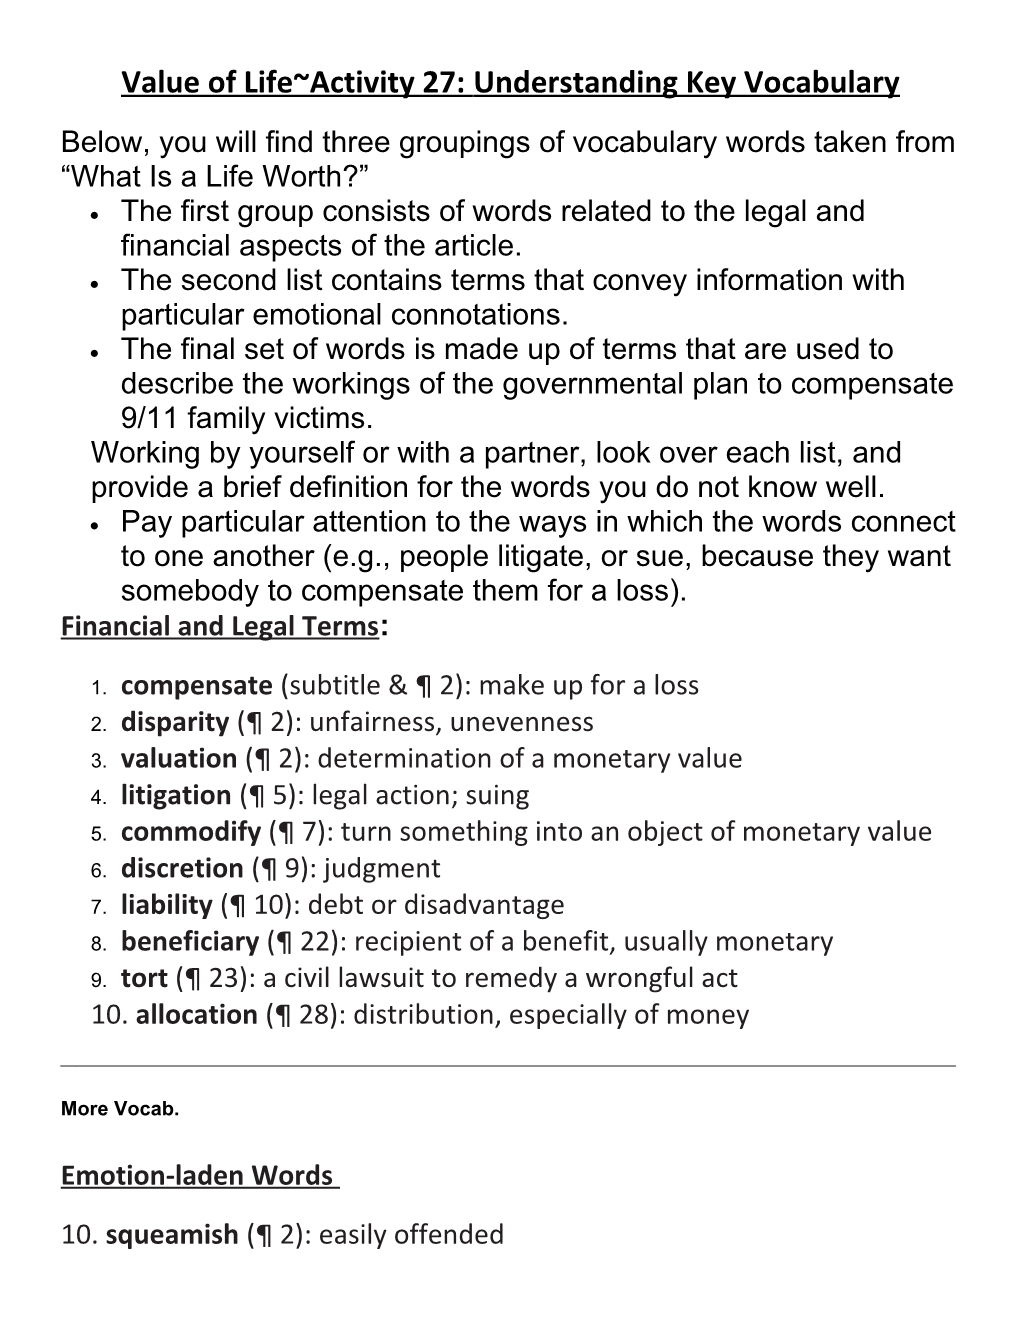 Value of Life Activity 27: Understanding Key Vocabulary